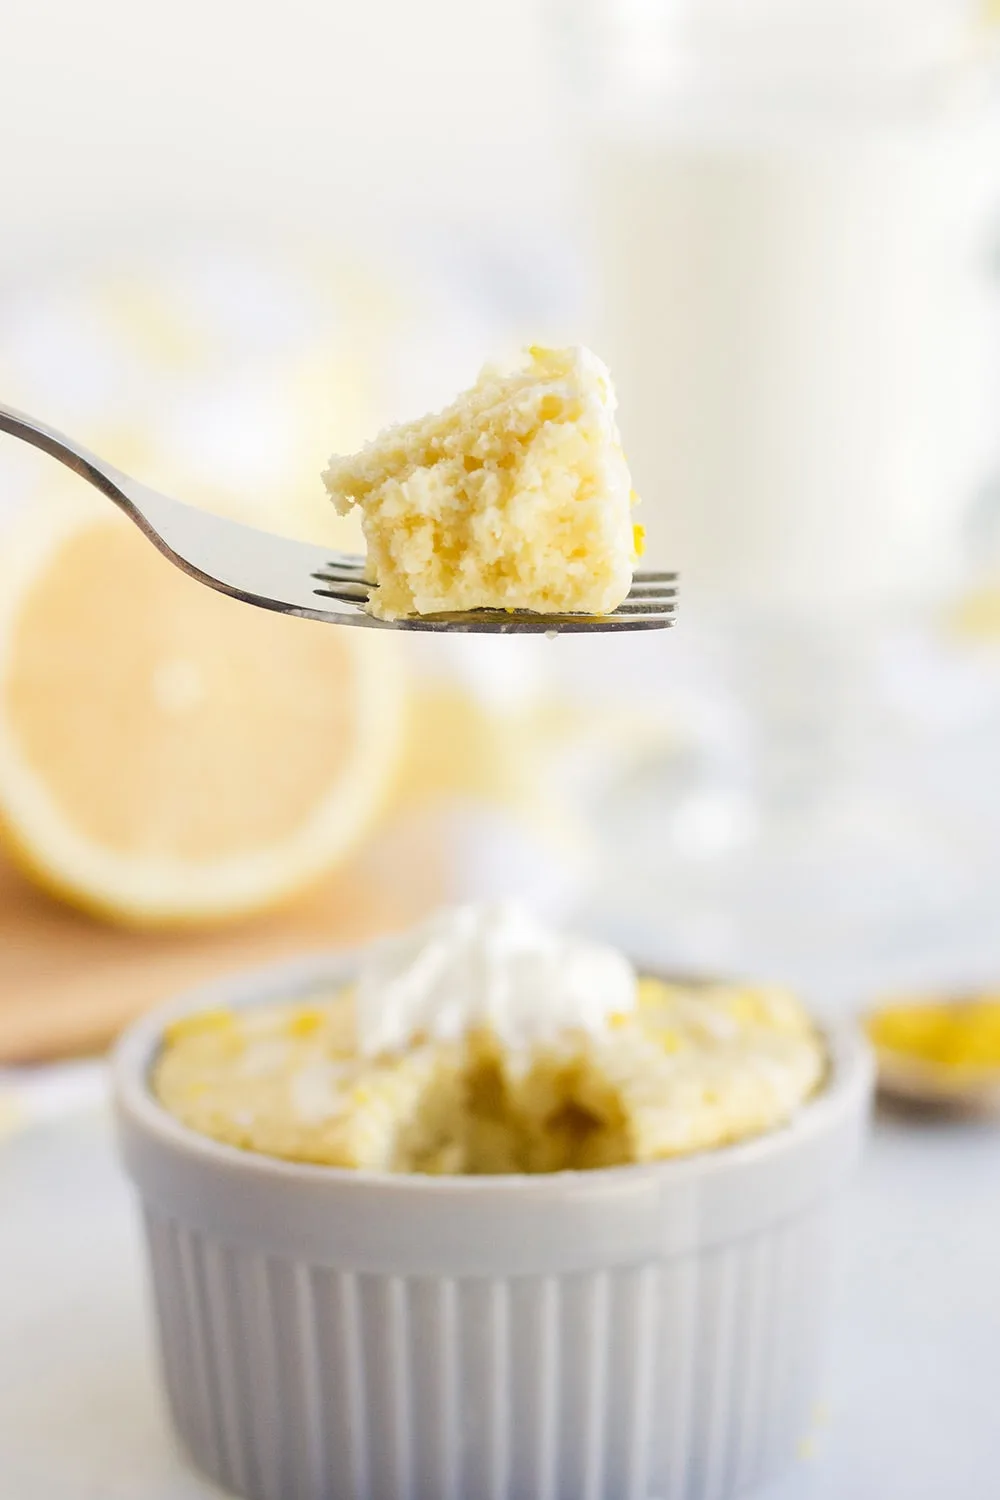 Lemon mug cake with cake on a fork and lemon in the background.